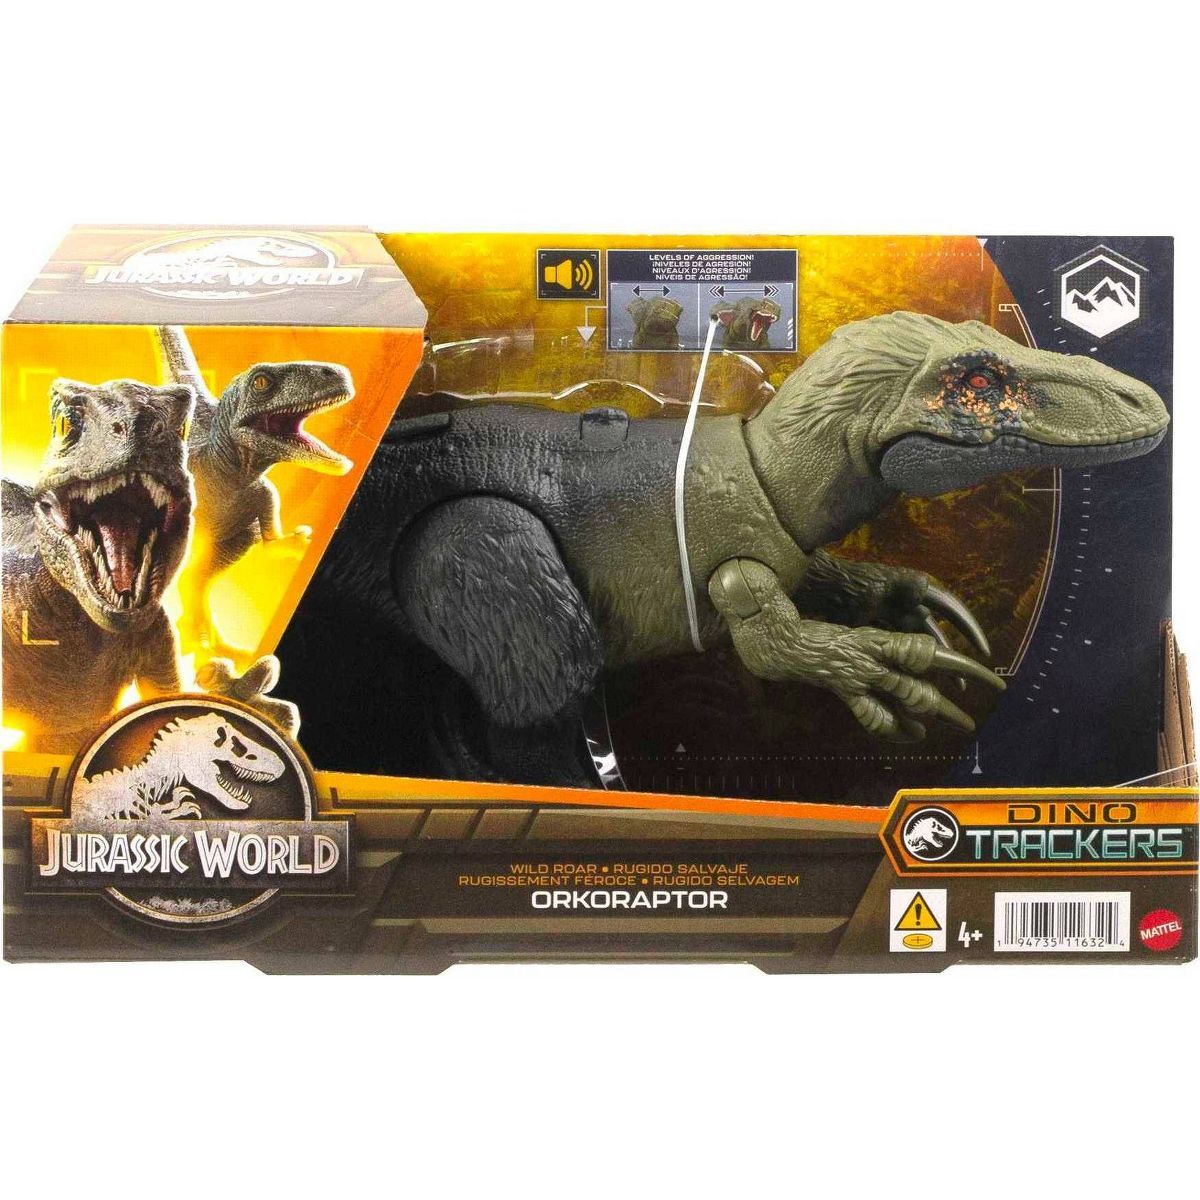 Jurassic World Dino Trackers Wild Roar Orkoraptor Action Figure | Target